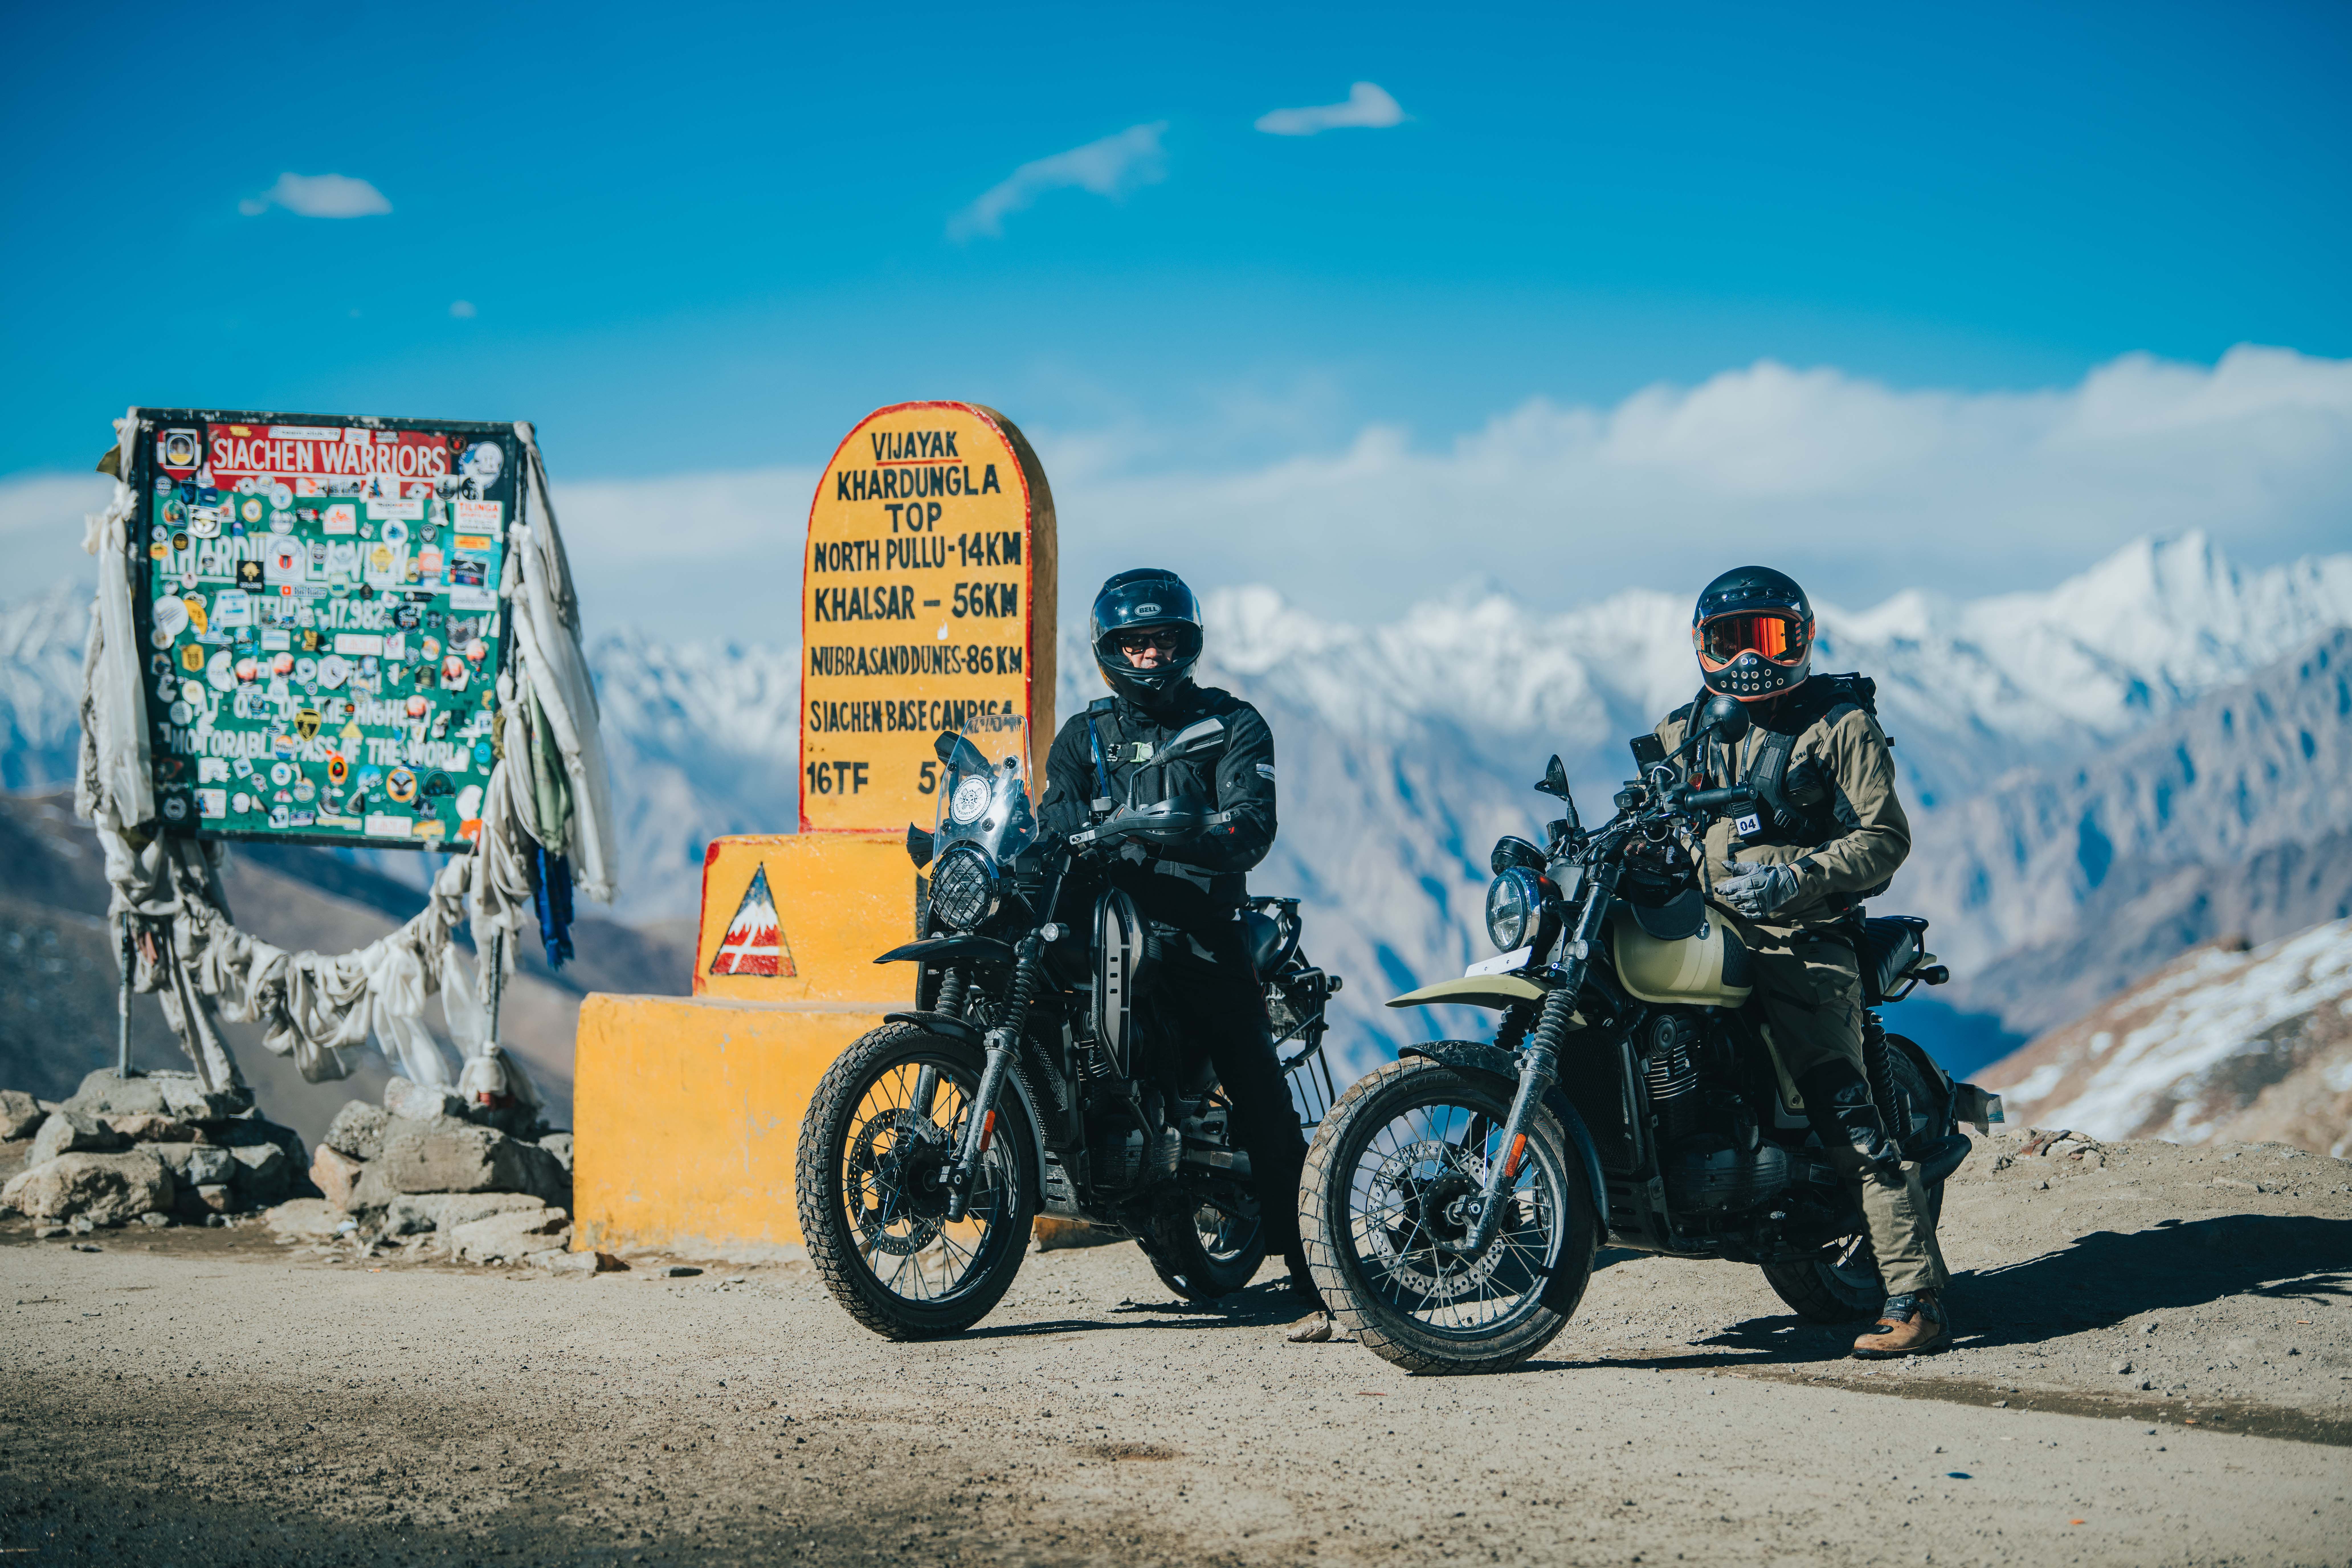 Jawa-Yezdi Motorcycles announces‘Service is on Us’ initiative for its Kommuniti members  en-route Ladakh decoding=